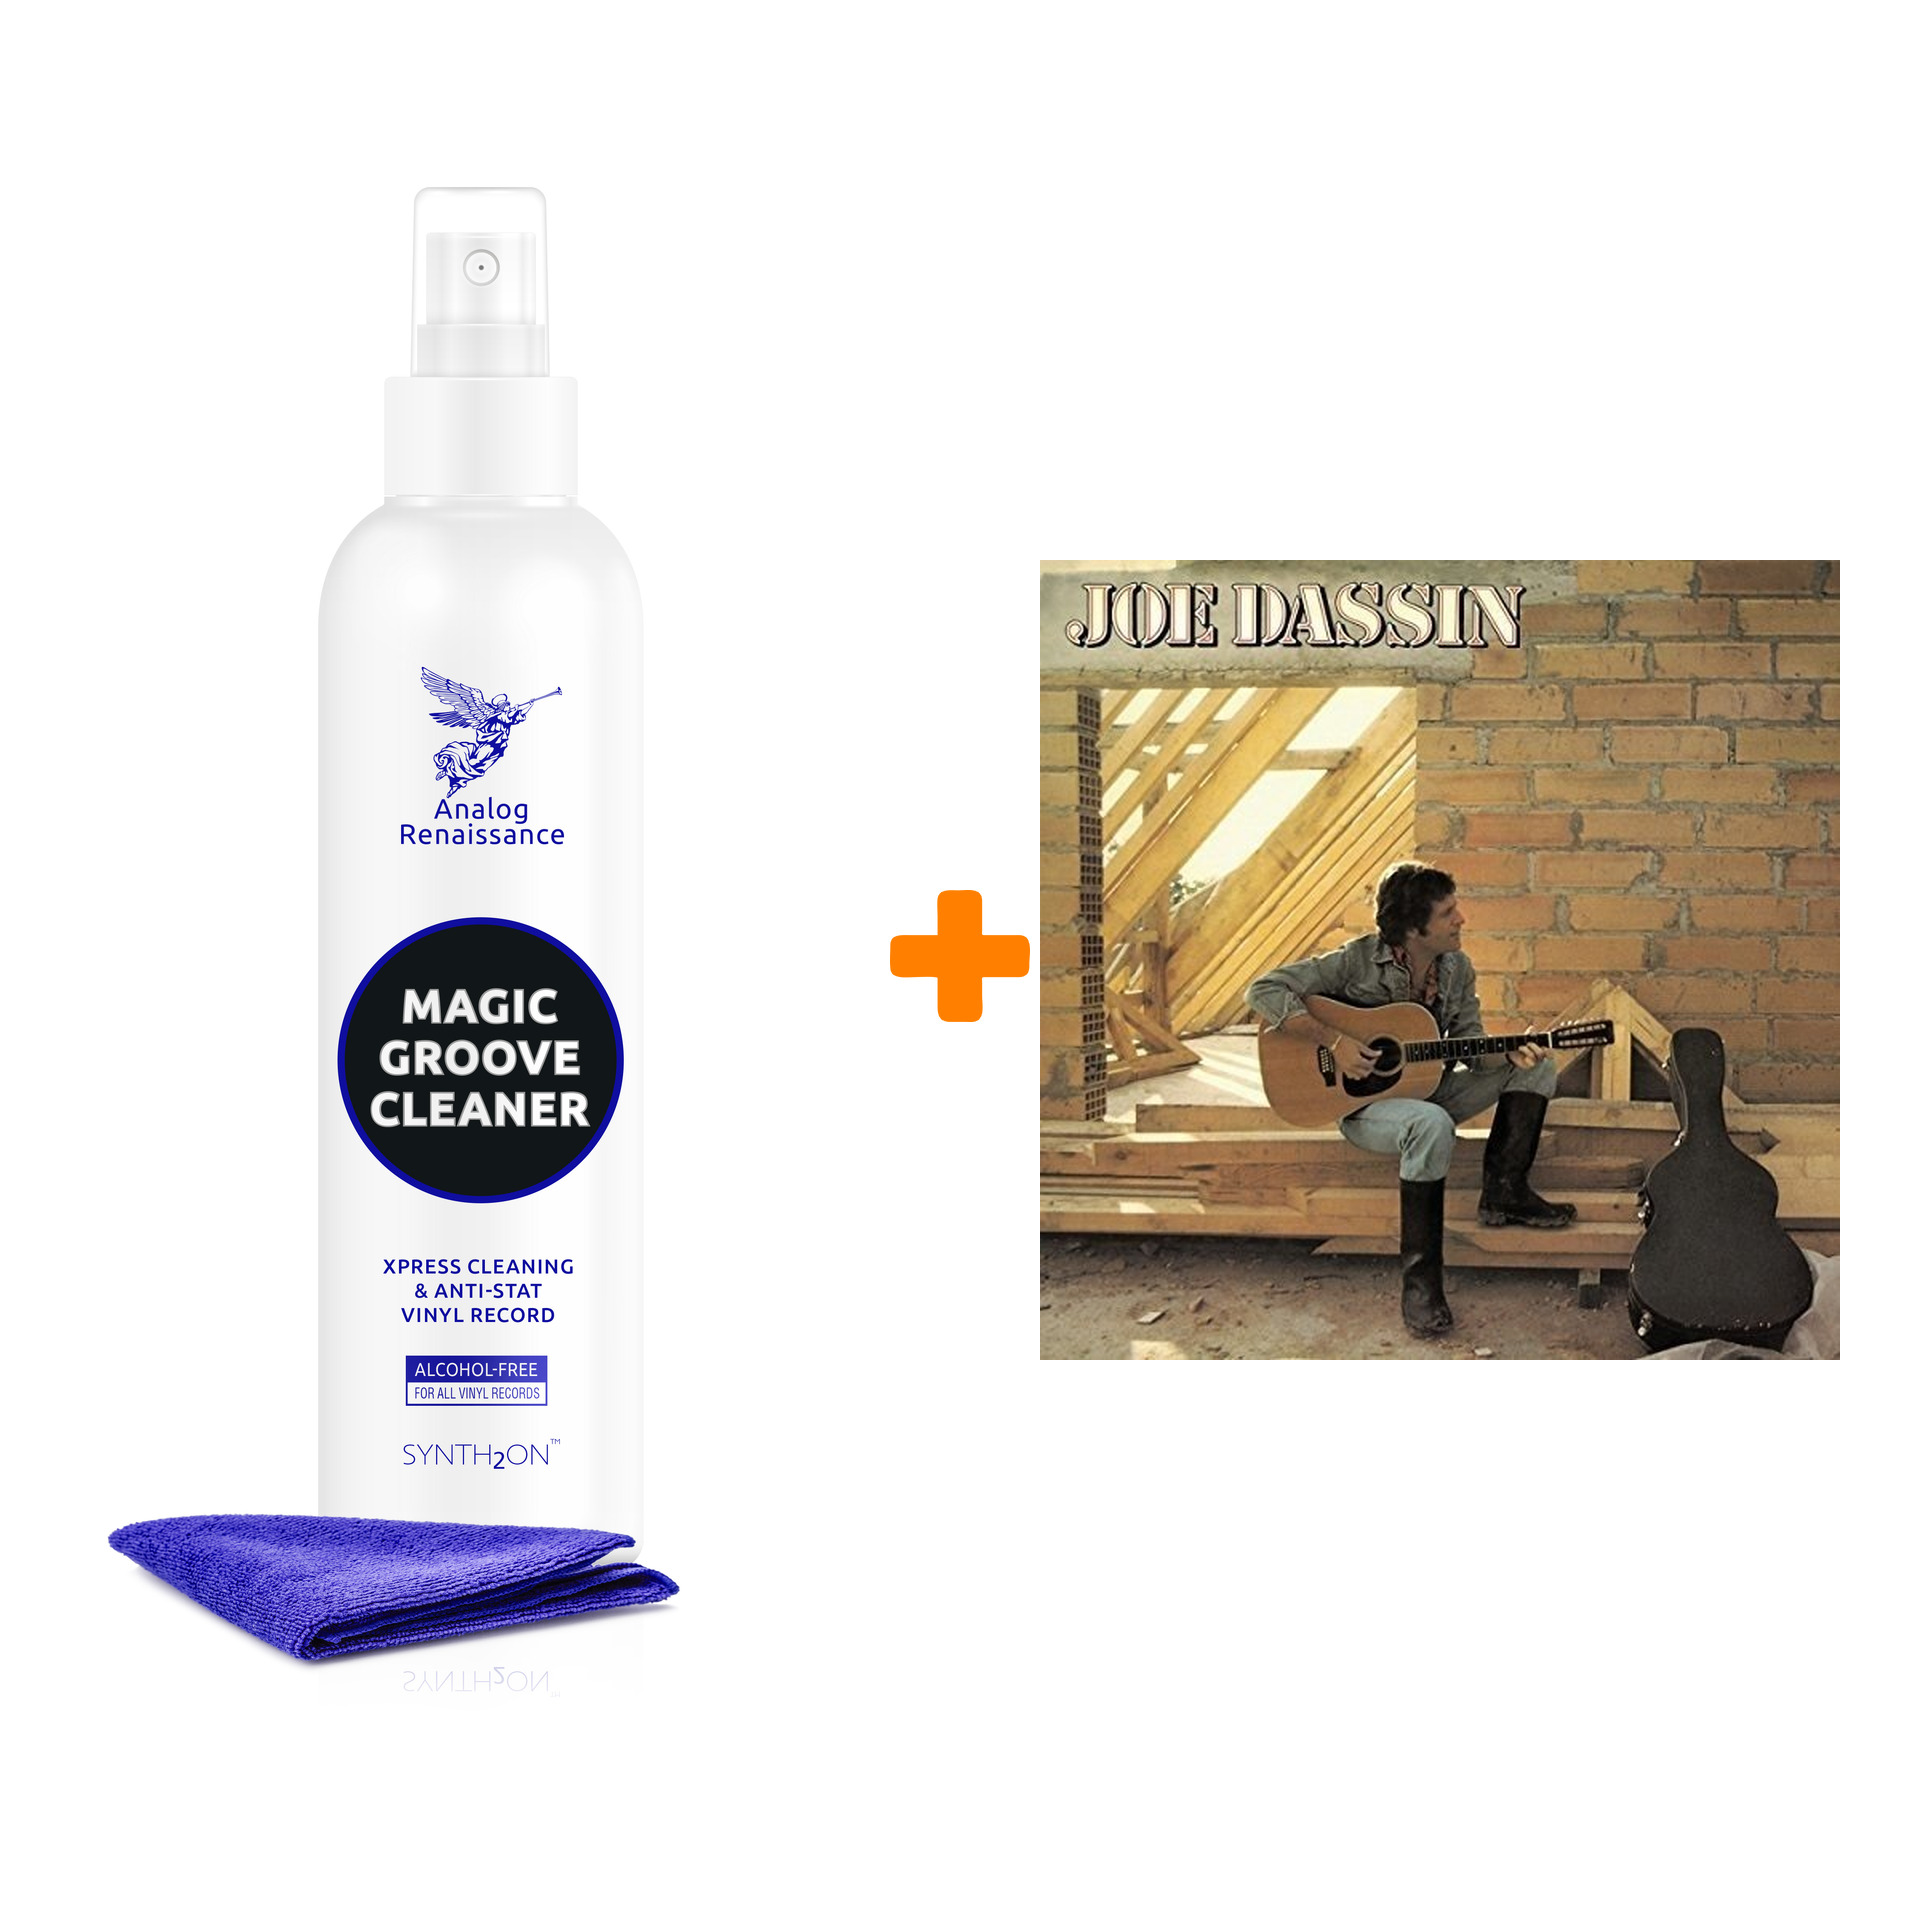 DASSIN JOE Joe Dassin LP + Спрей для очистки LP с микрофиброй 250мл Набор цена и фото